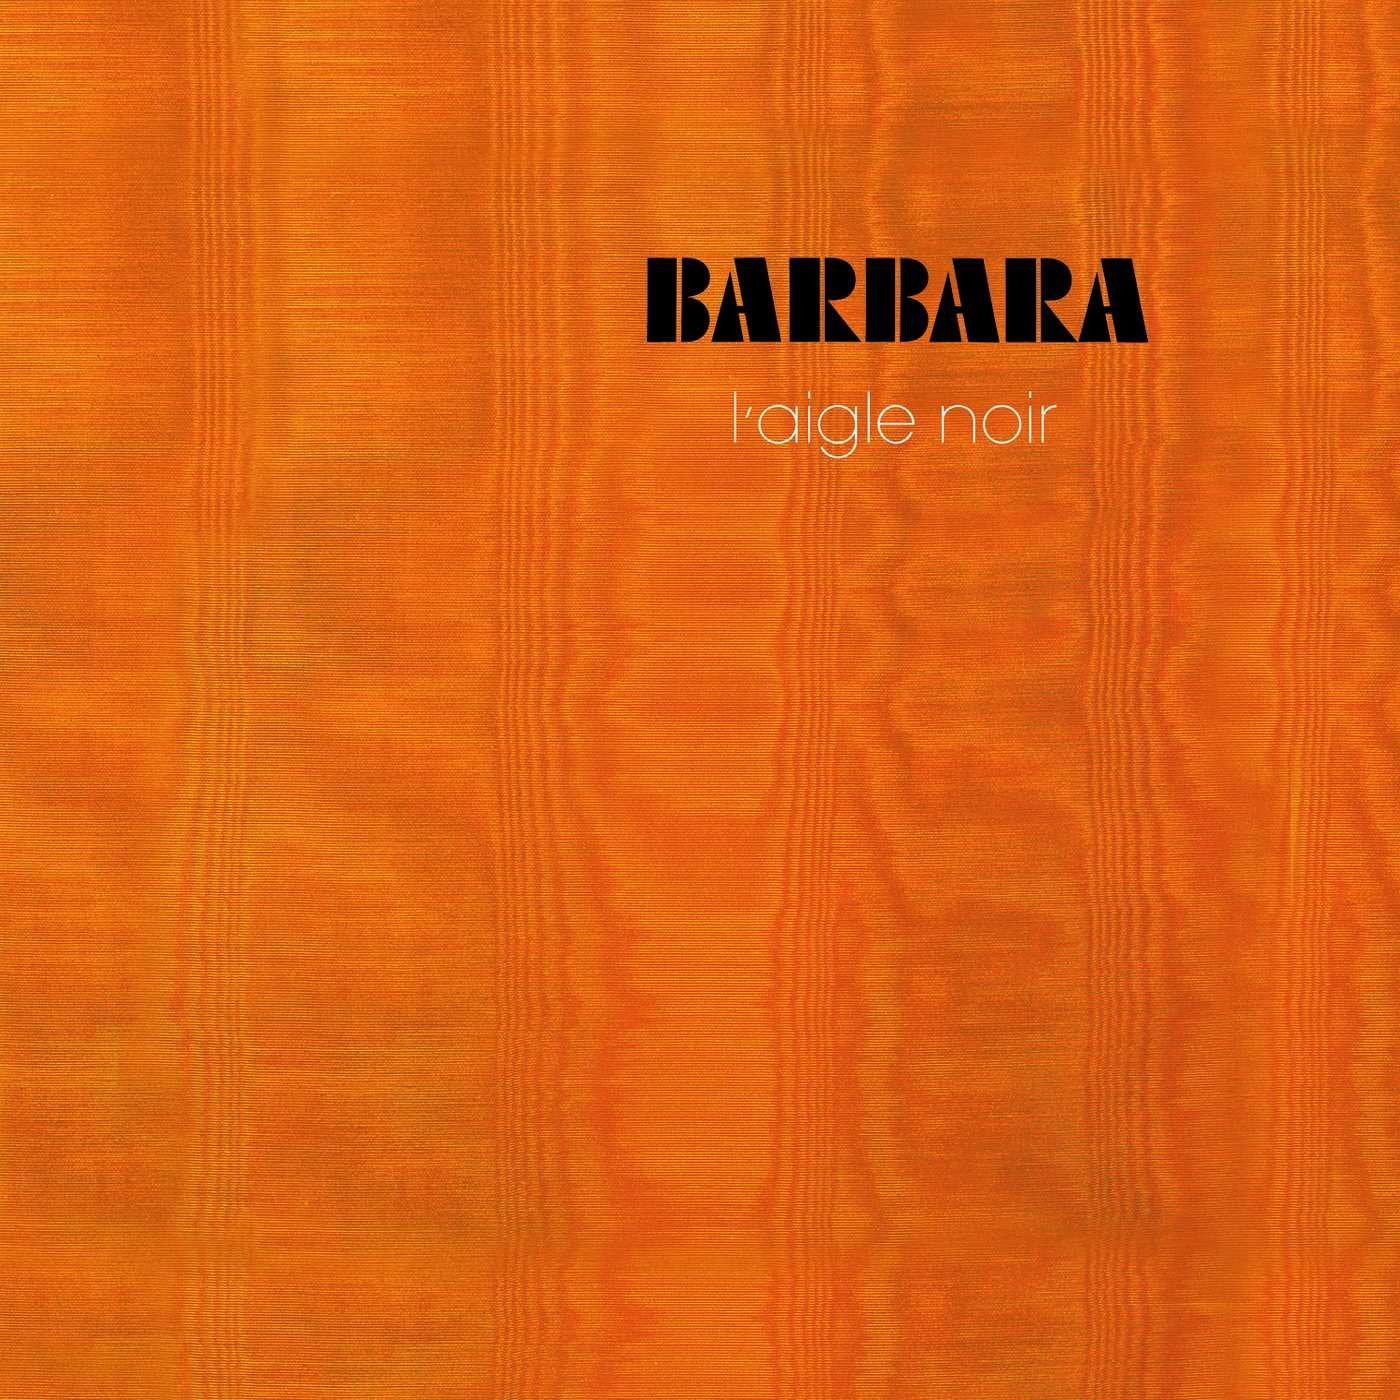 Barbara - L'aigle noir - Vinyle